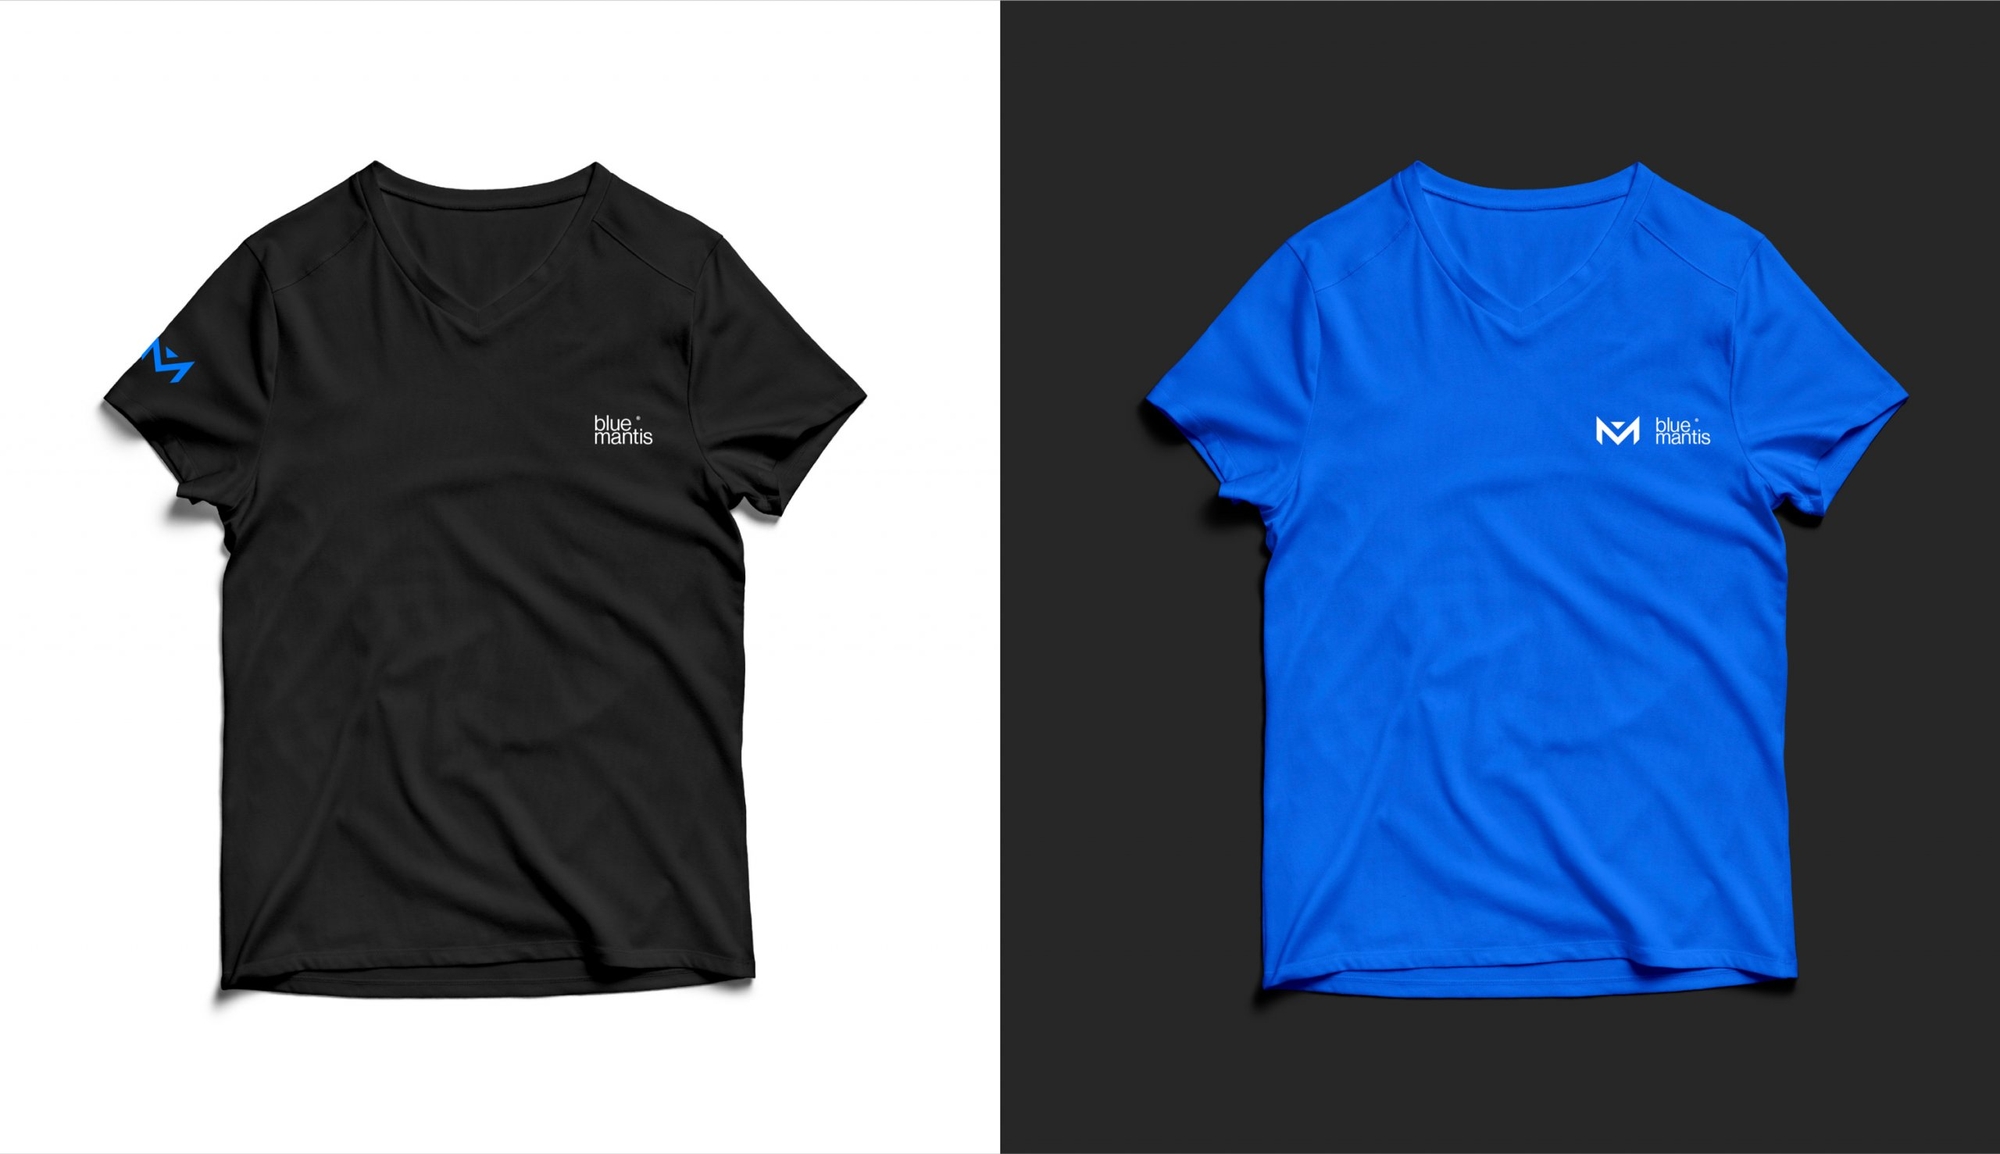 Blue Mantis logo on t-shirts